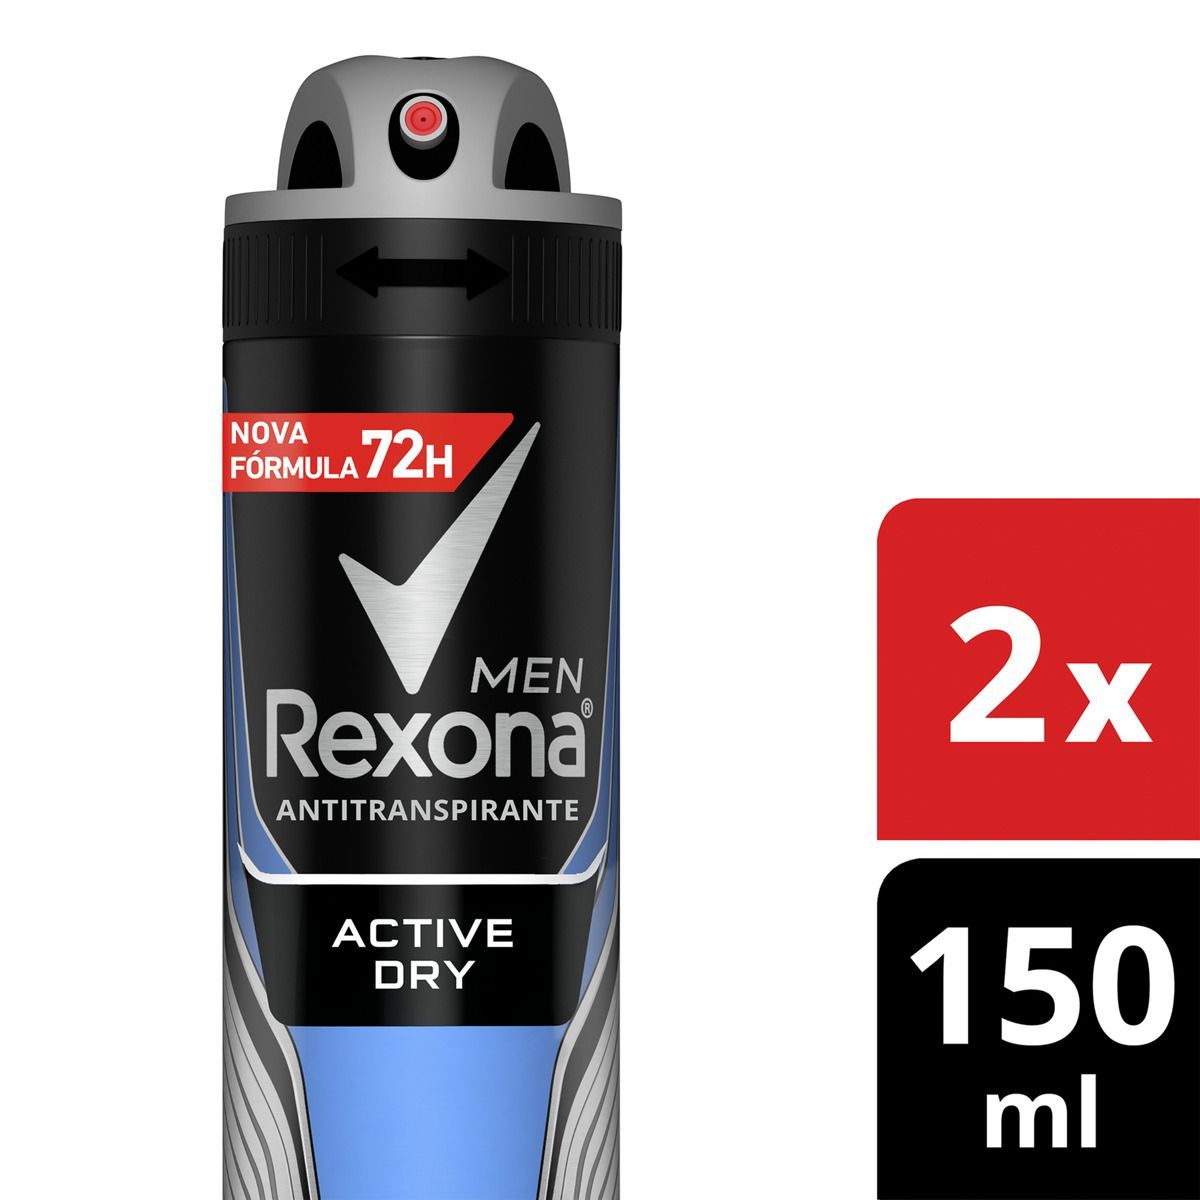 Desodorante Antitranspirante Aerosol Masculino Rexona Active Dry 72 Horas 2 X 150ml image number 1